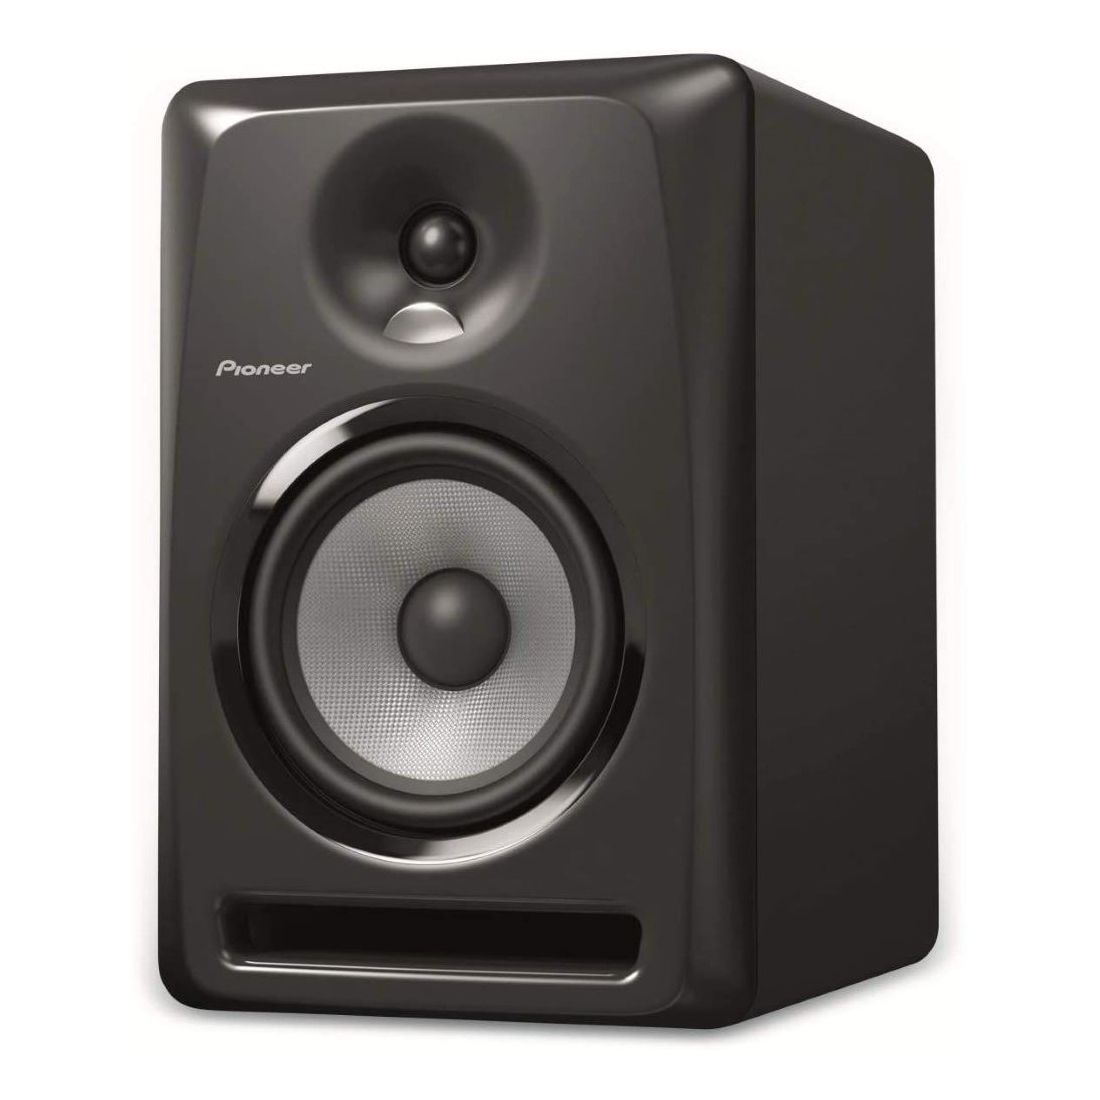 Pioneer DJ S-DJ60X Active Monitor Speaker (Single) - Black